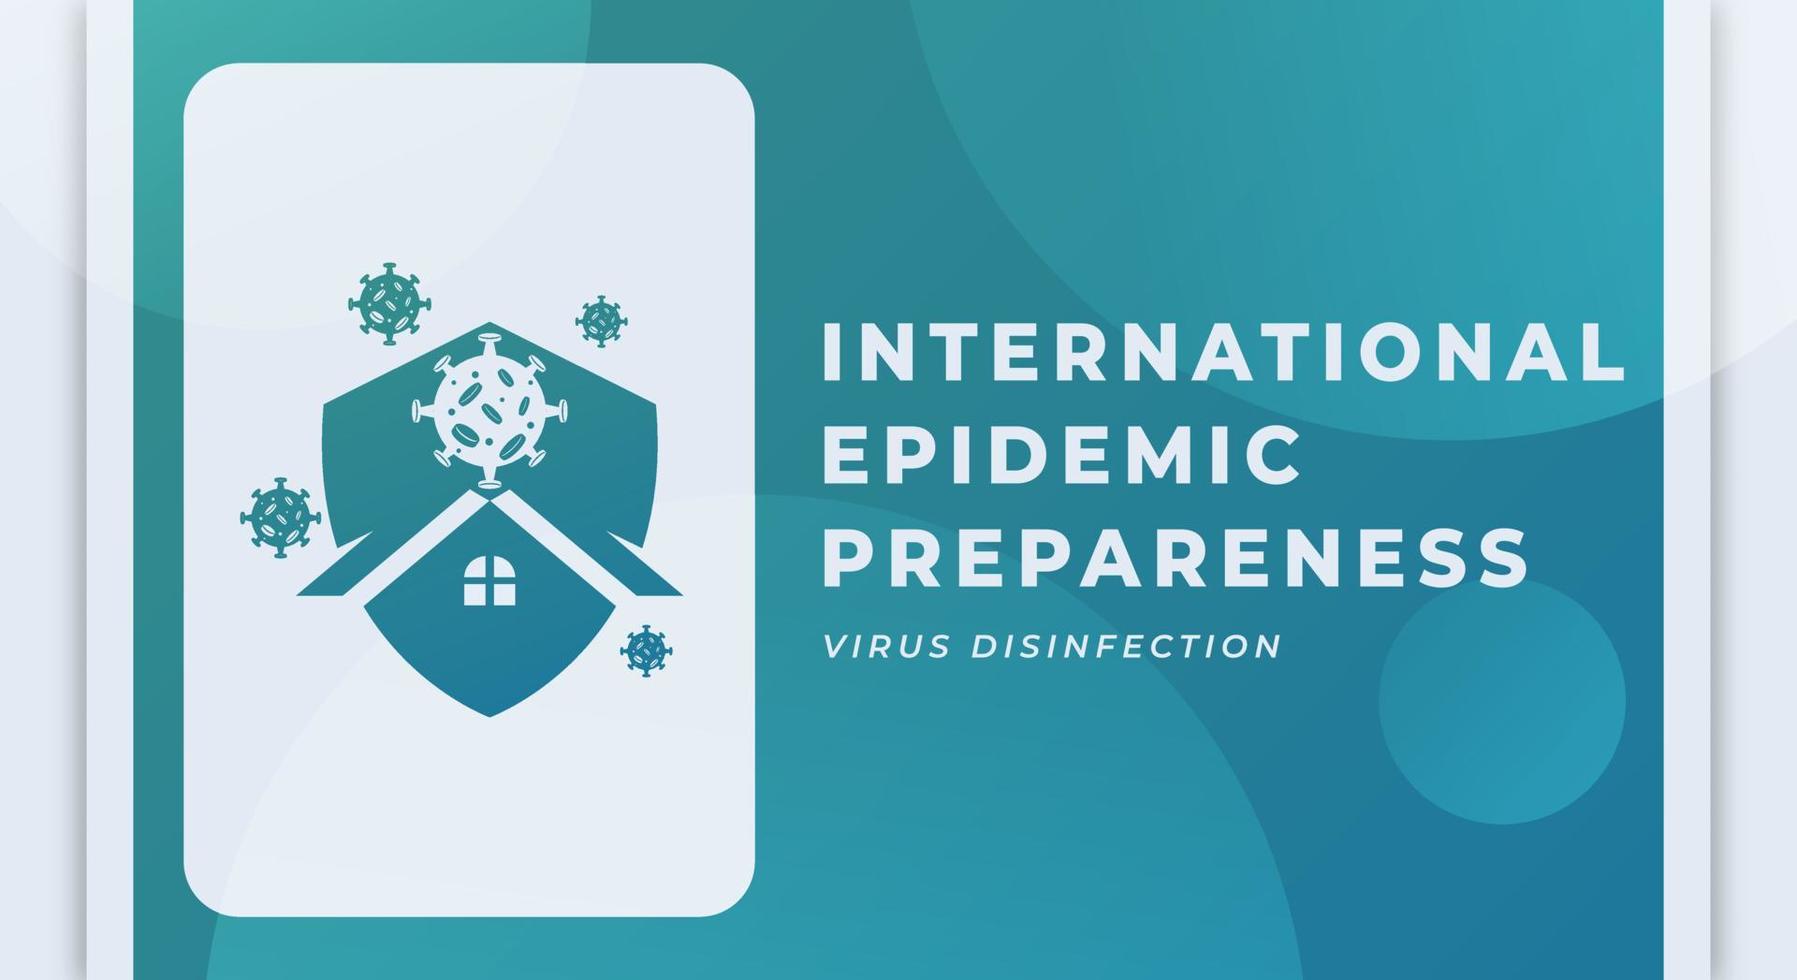 Happy International Day of Epidemic Preparedness Celebration Vector Design Illustration for Background, Poster, Banner, Advertising, Greeting Card